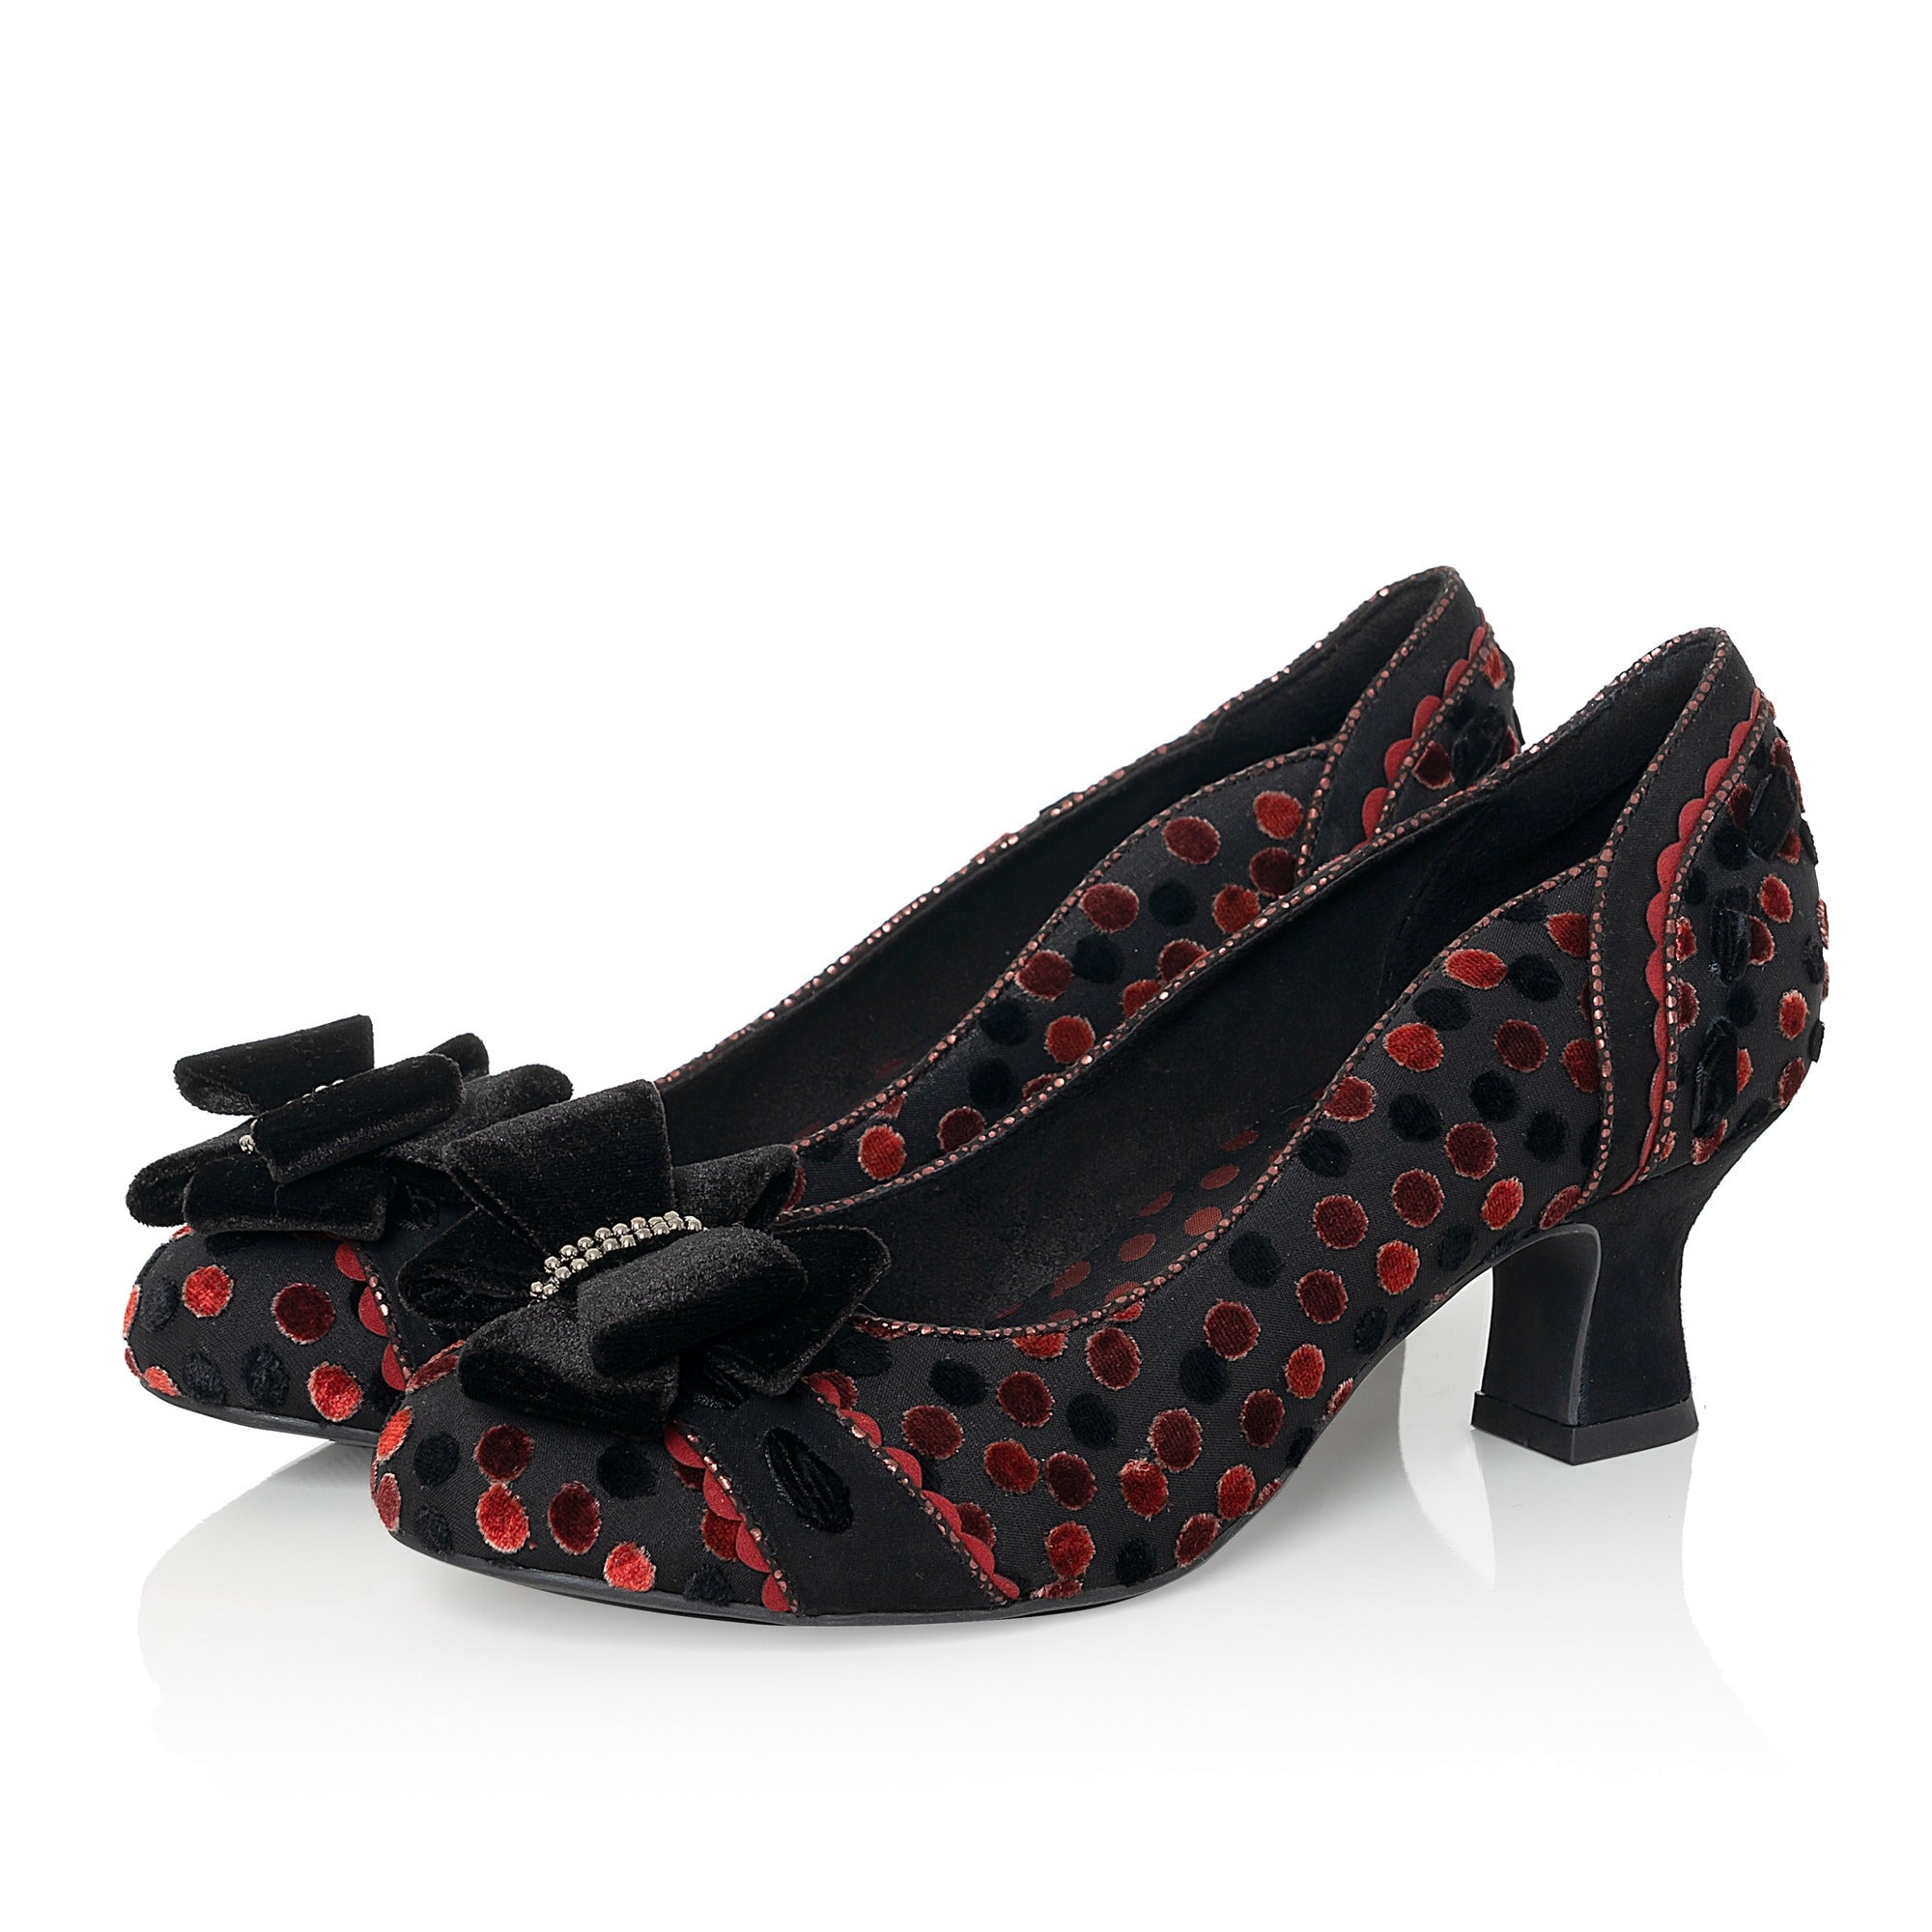 Ruby Shoo Rhea Red Noir Court Shoes